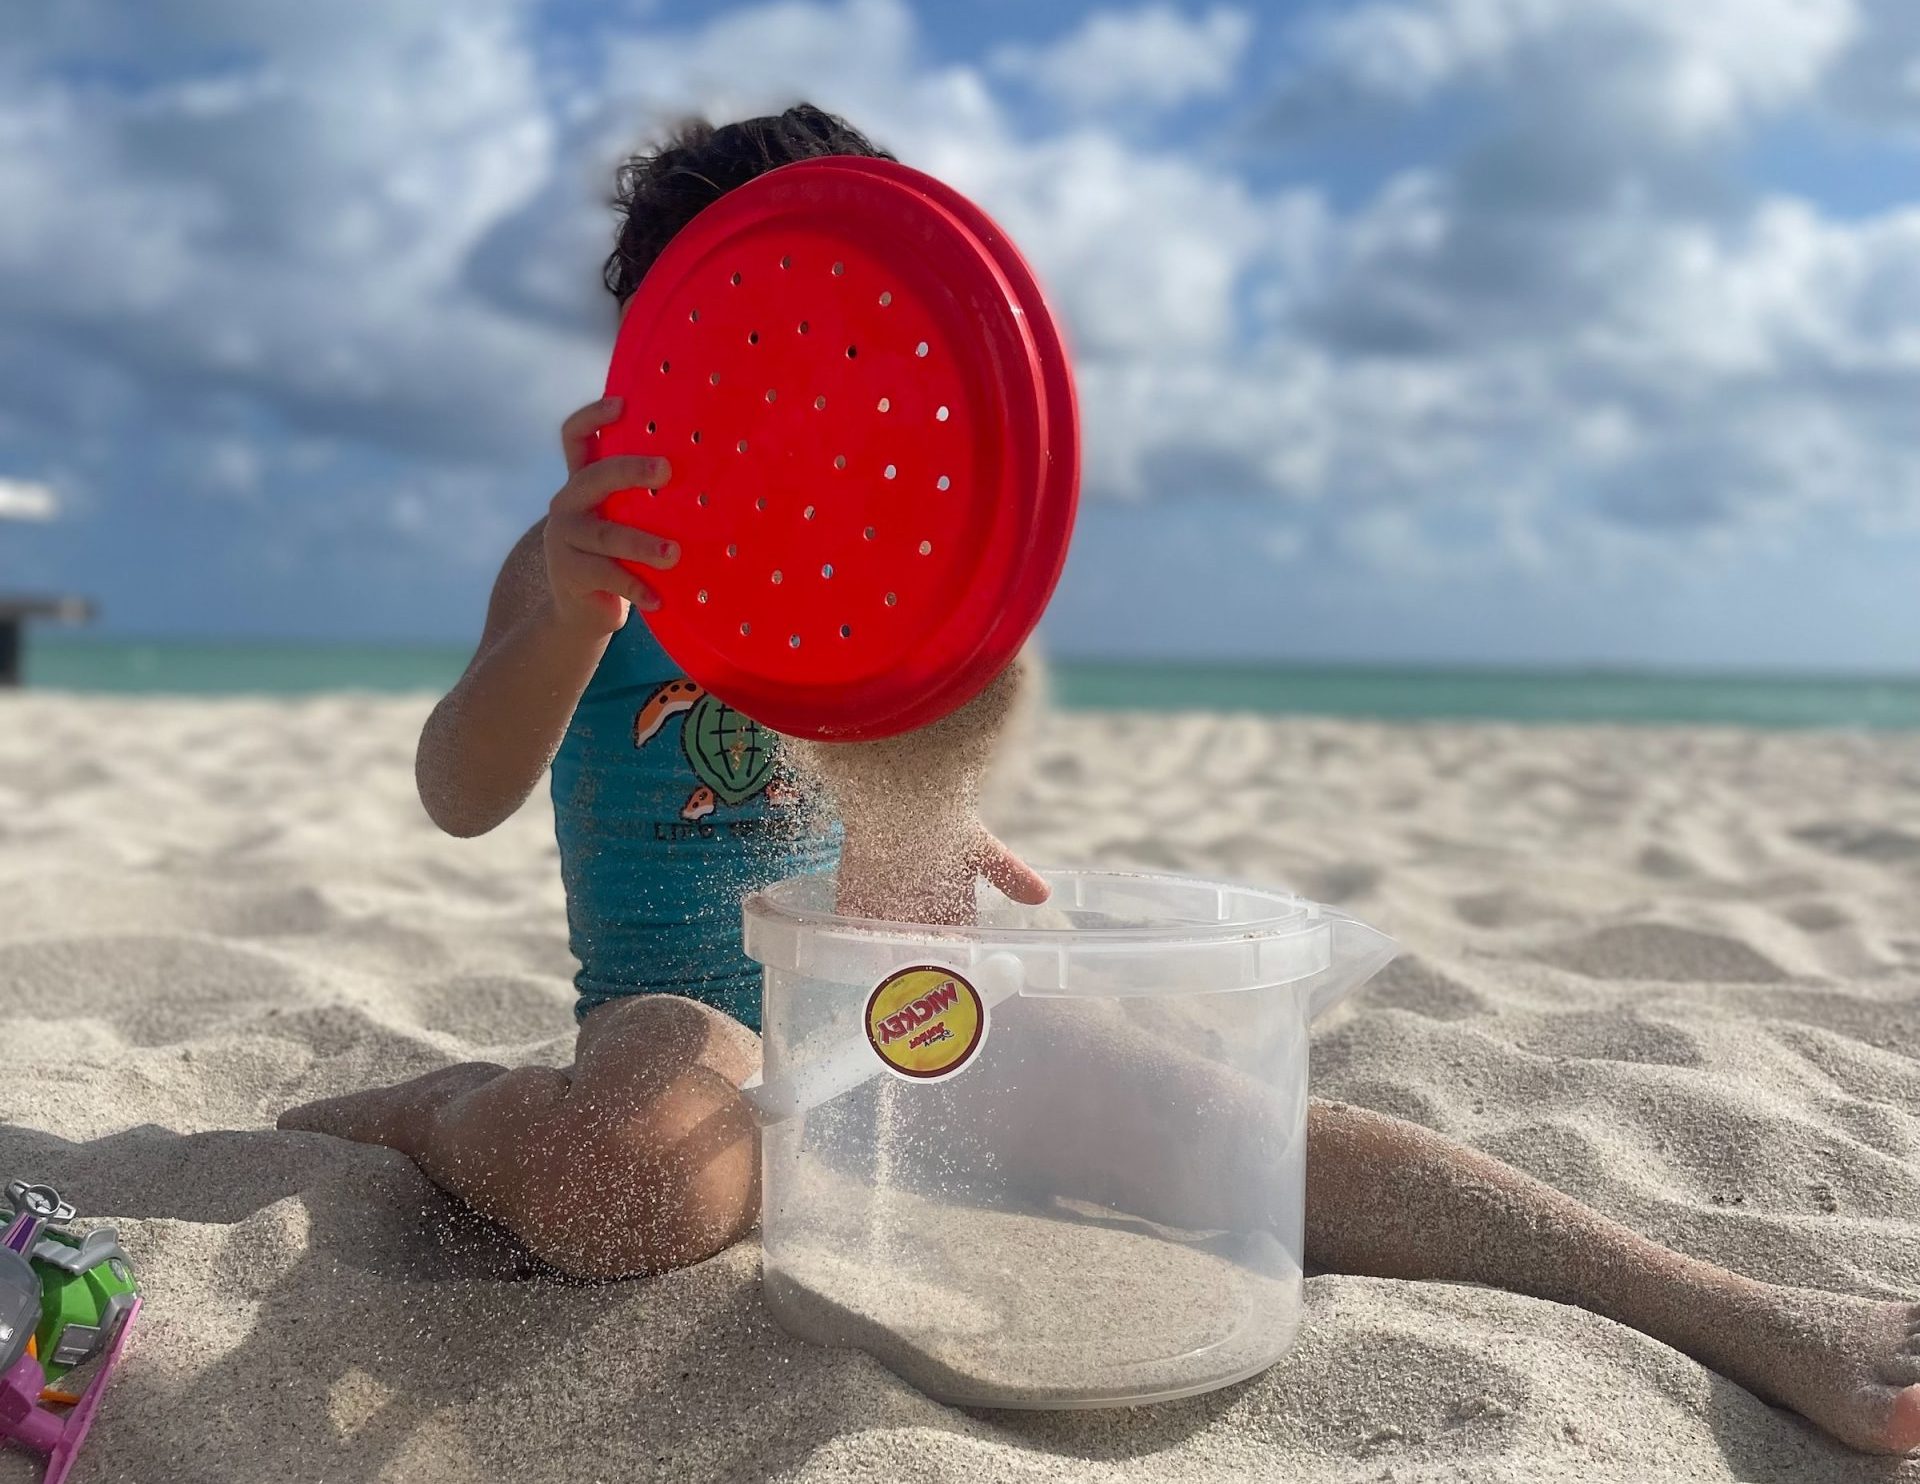 Everyone likes to play in the sand at Miami Beach (Photo by Aysel Shukurlu via Unsplash)